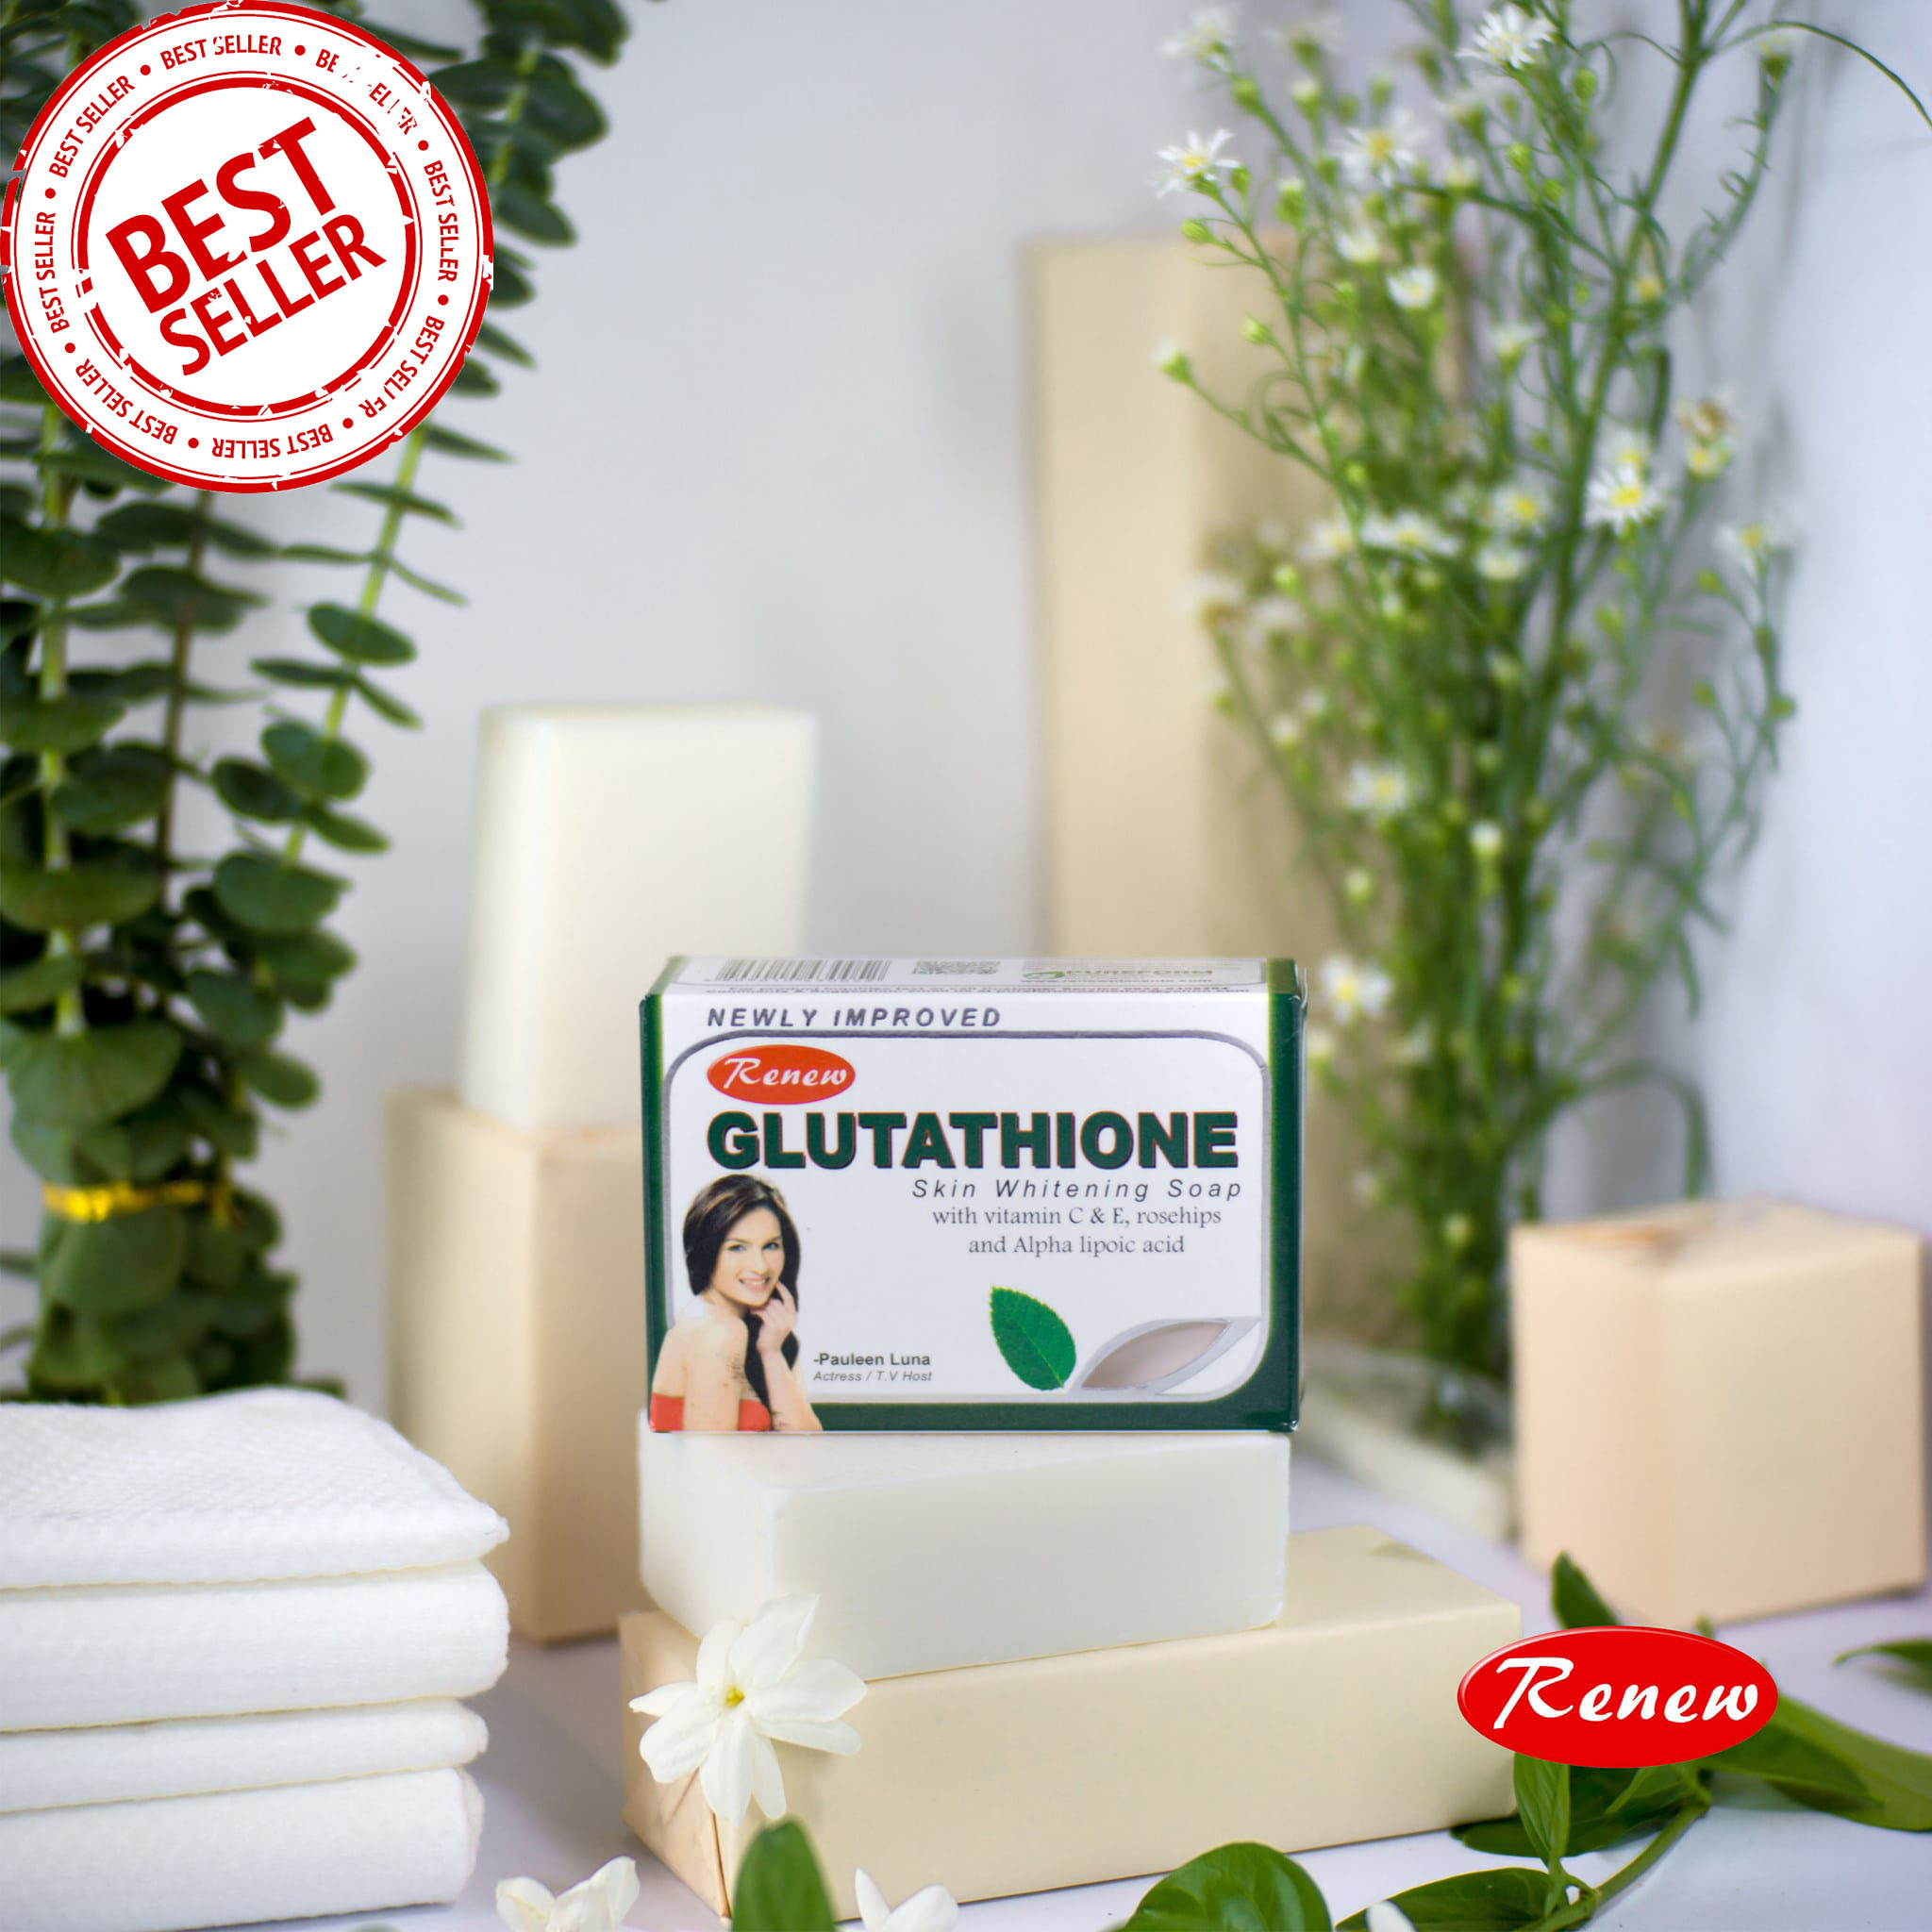 glutathione soap best seller philippines